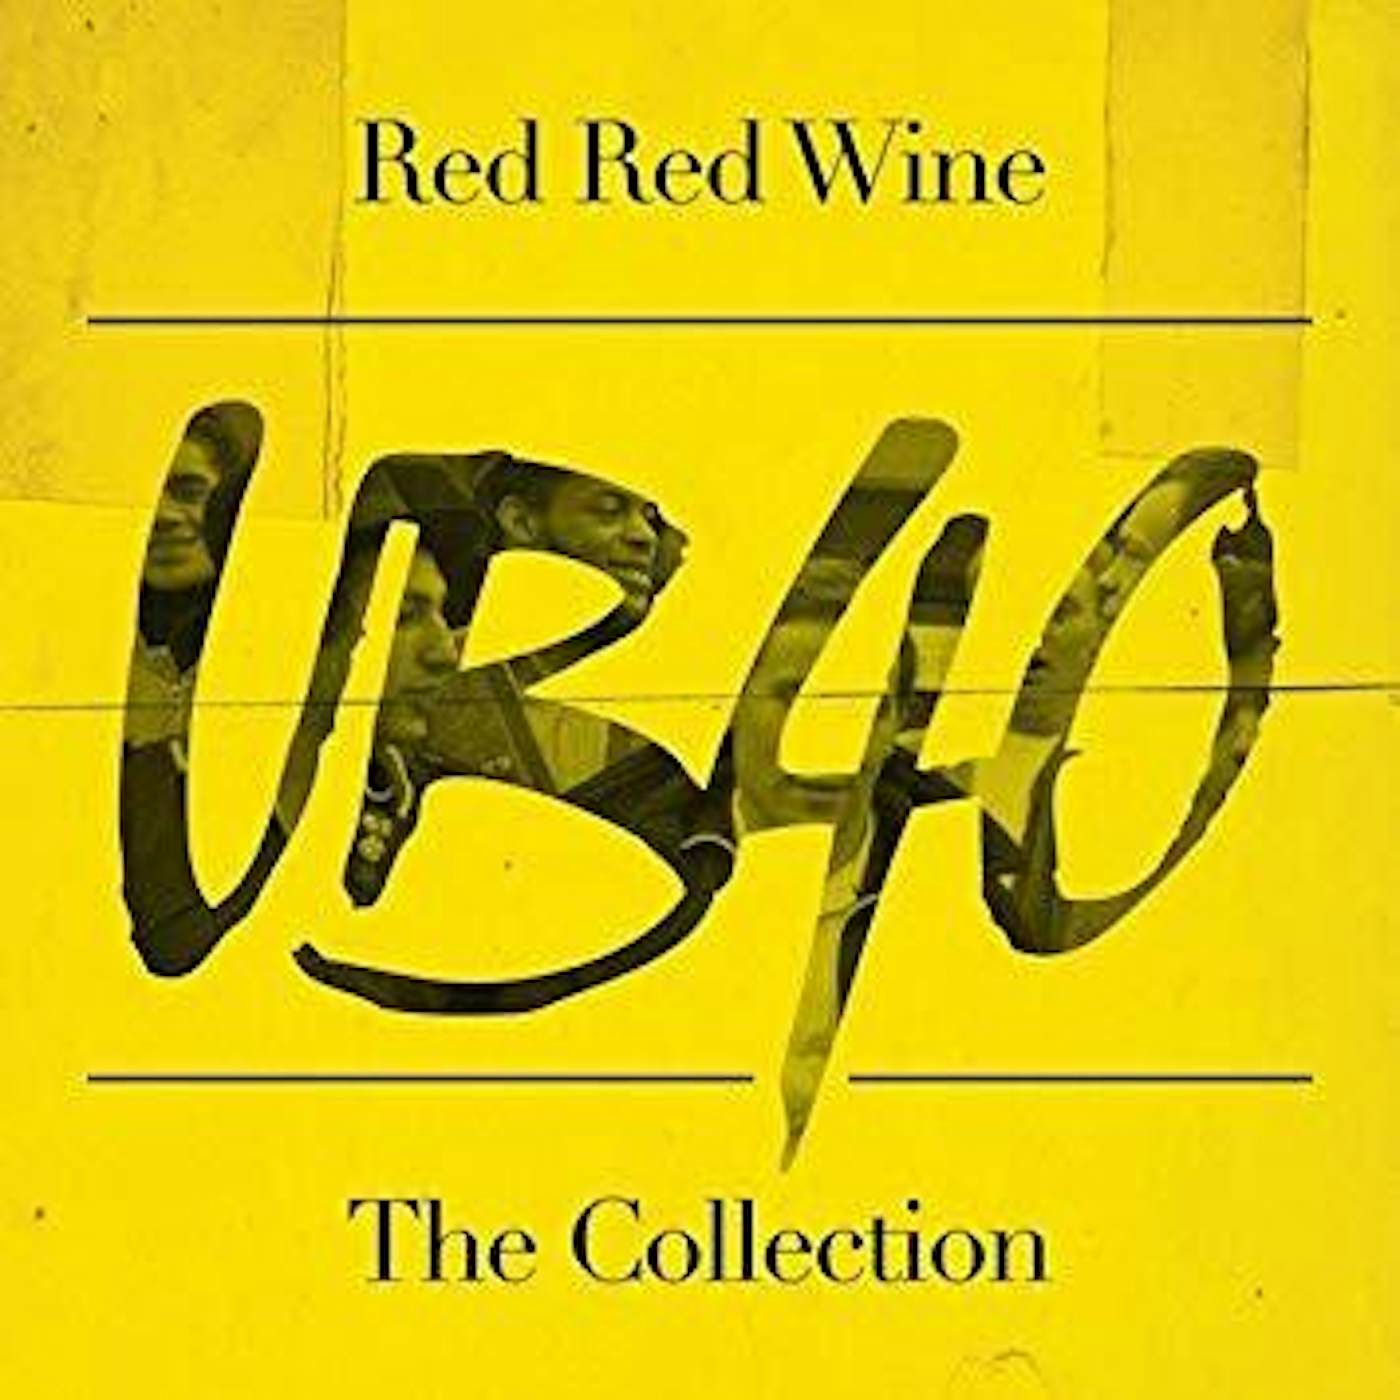 UB40 RED RED WINE Vinyl Record